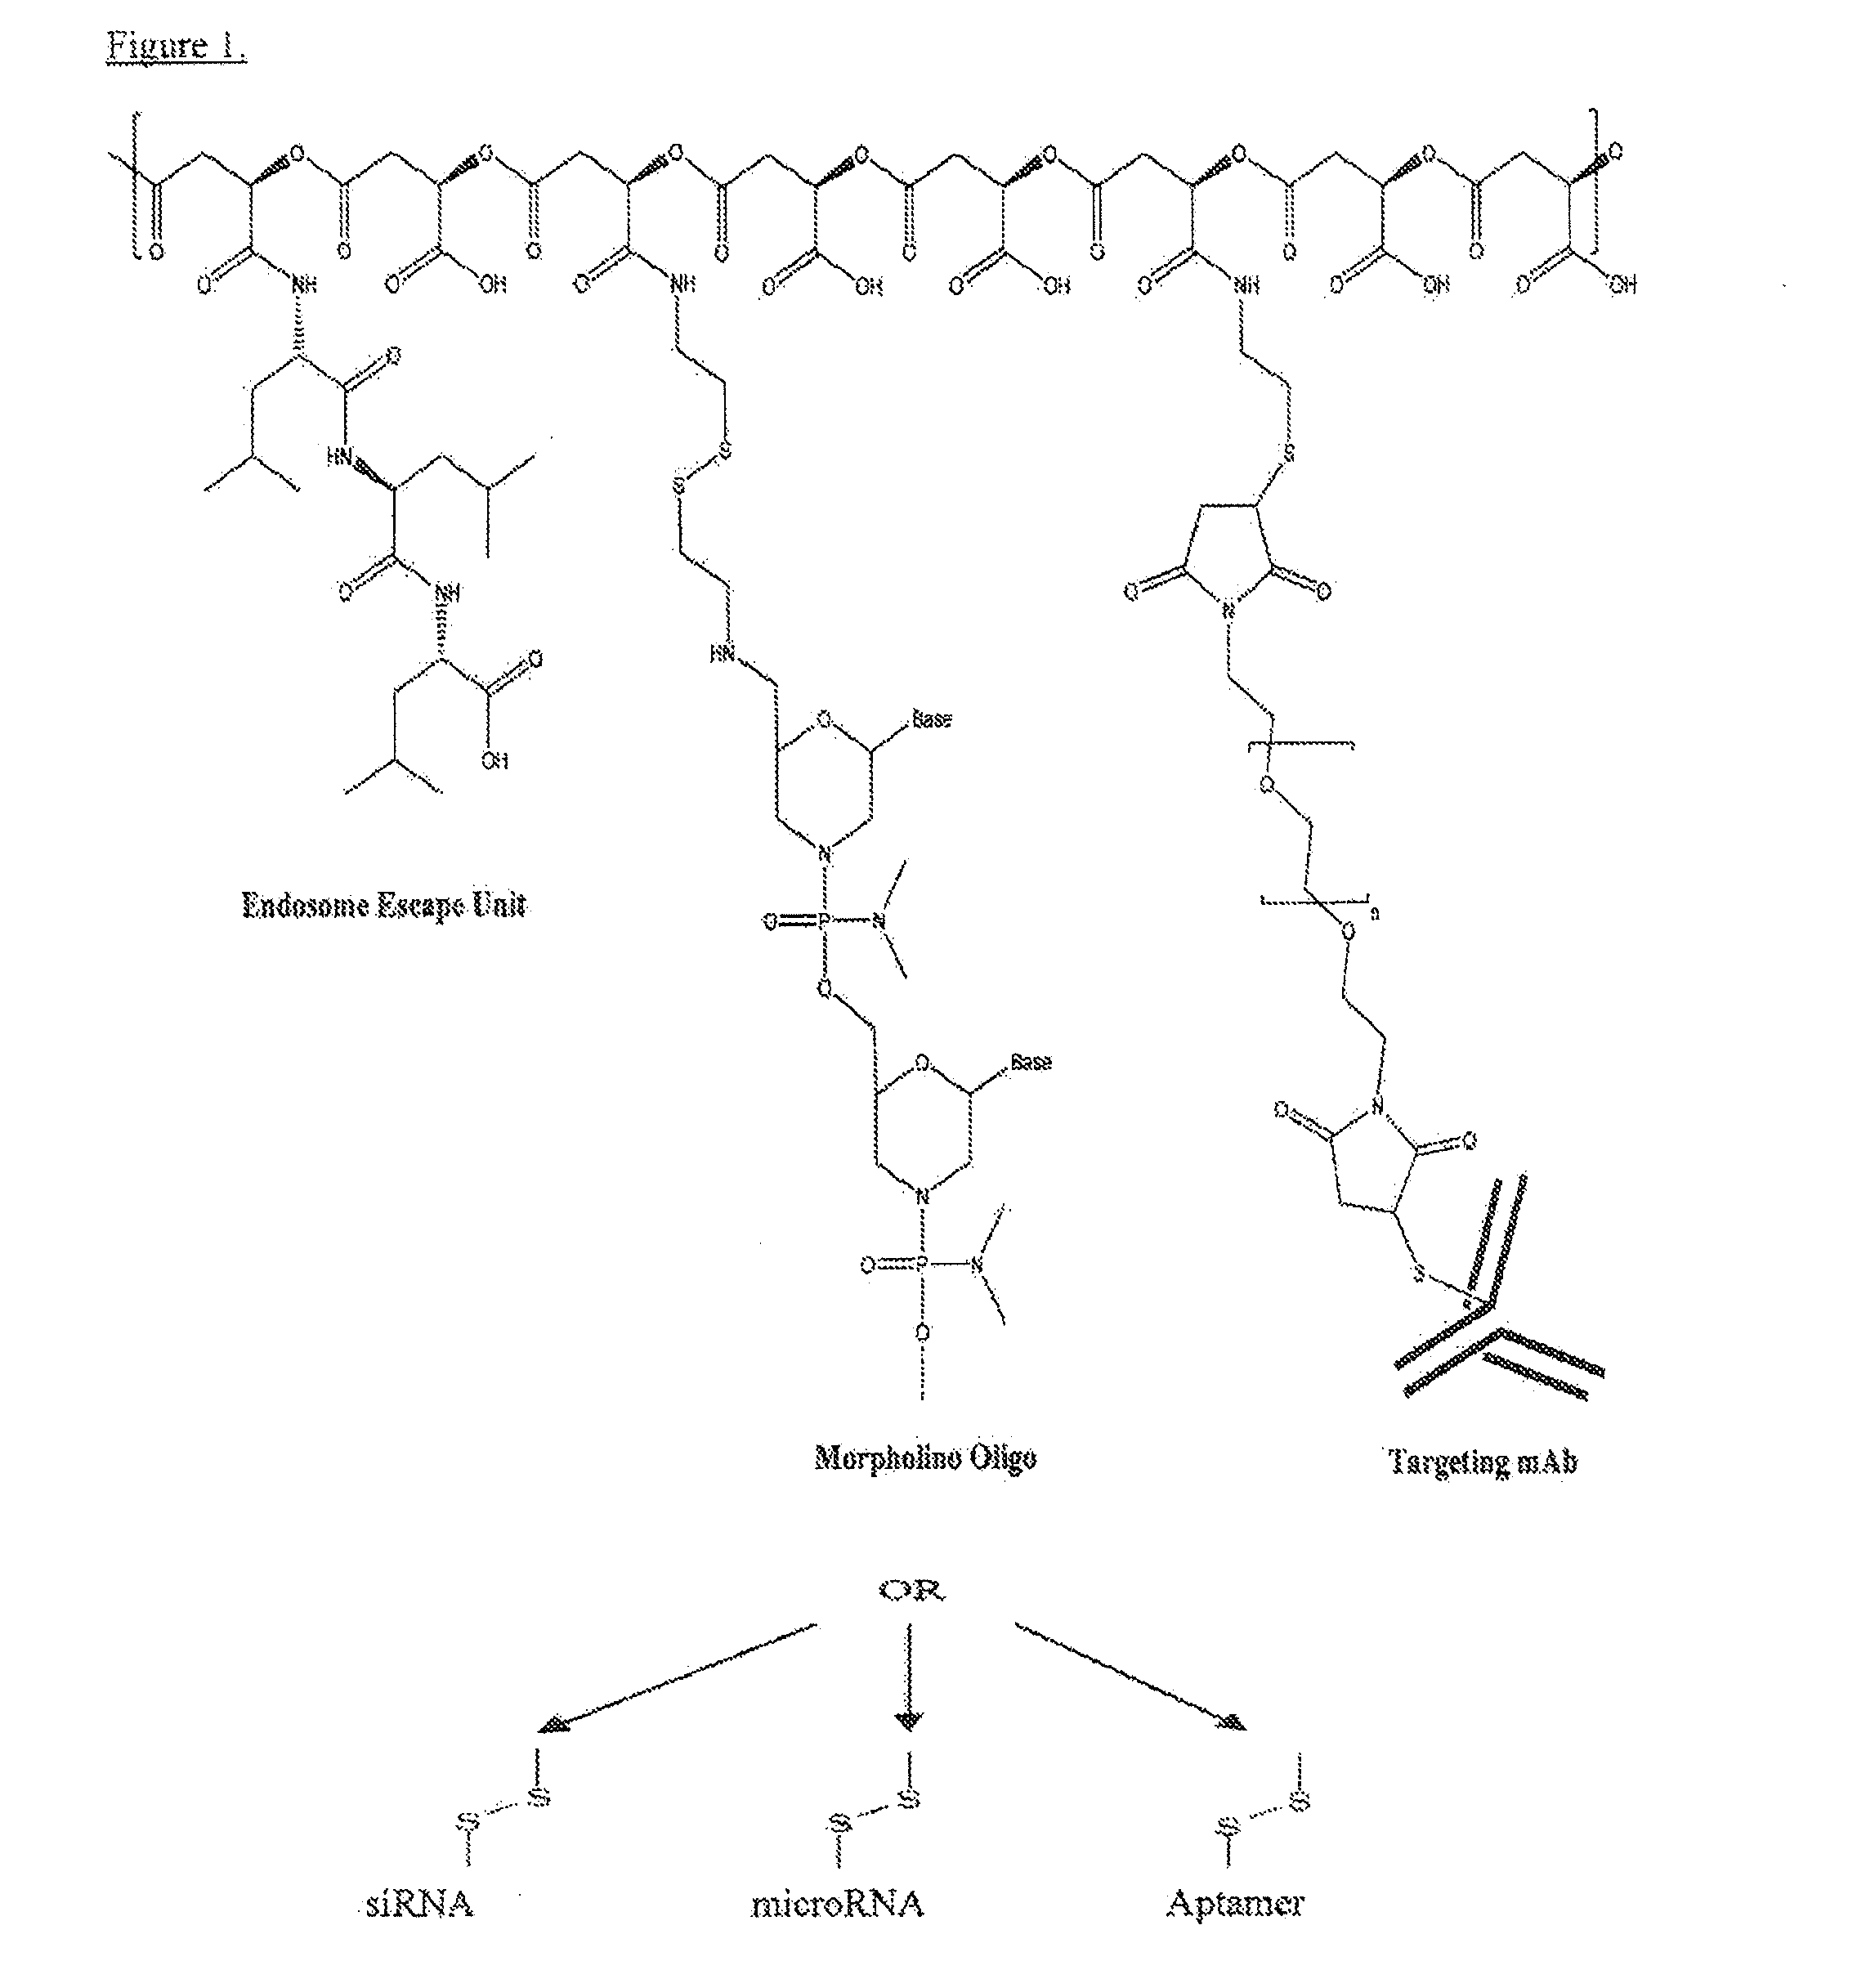 Poly(beta malic acid) with pendant leu-leu-leu tripeptide for effective cytoplasmic drug delivery